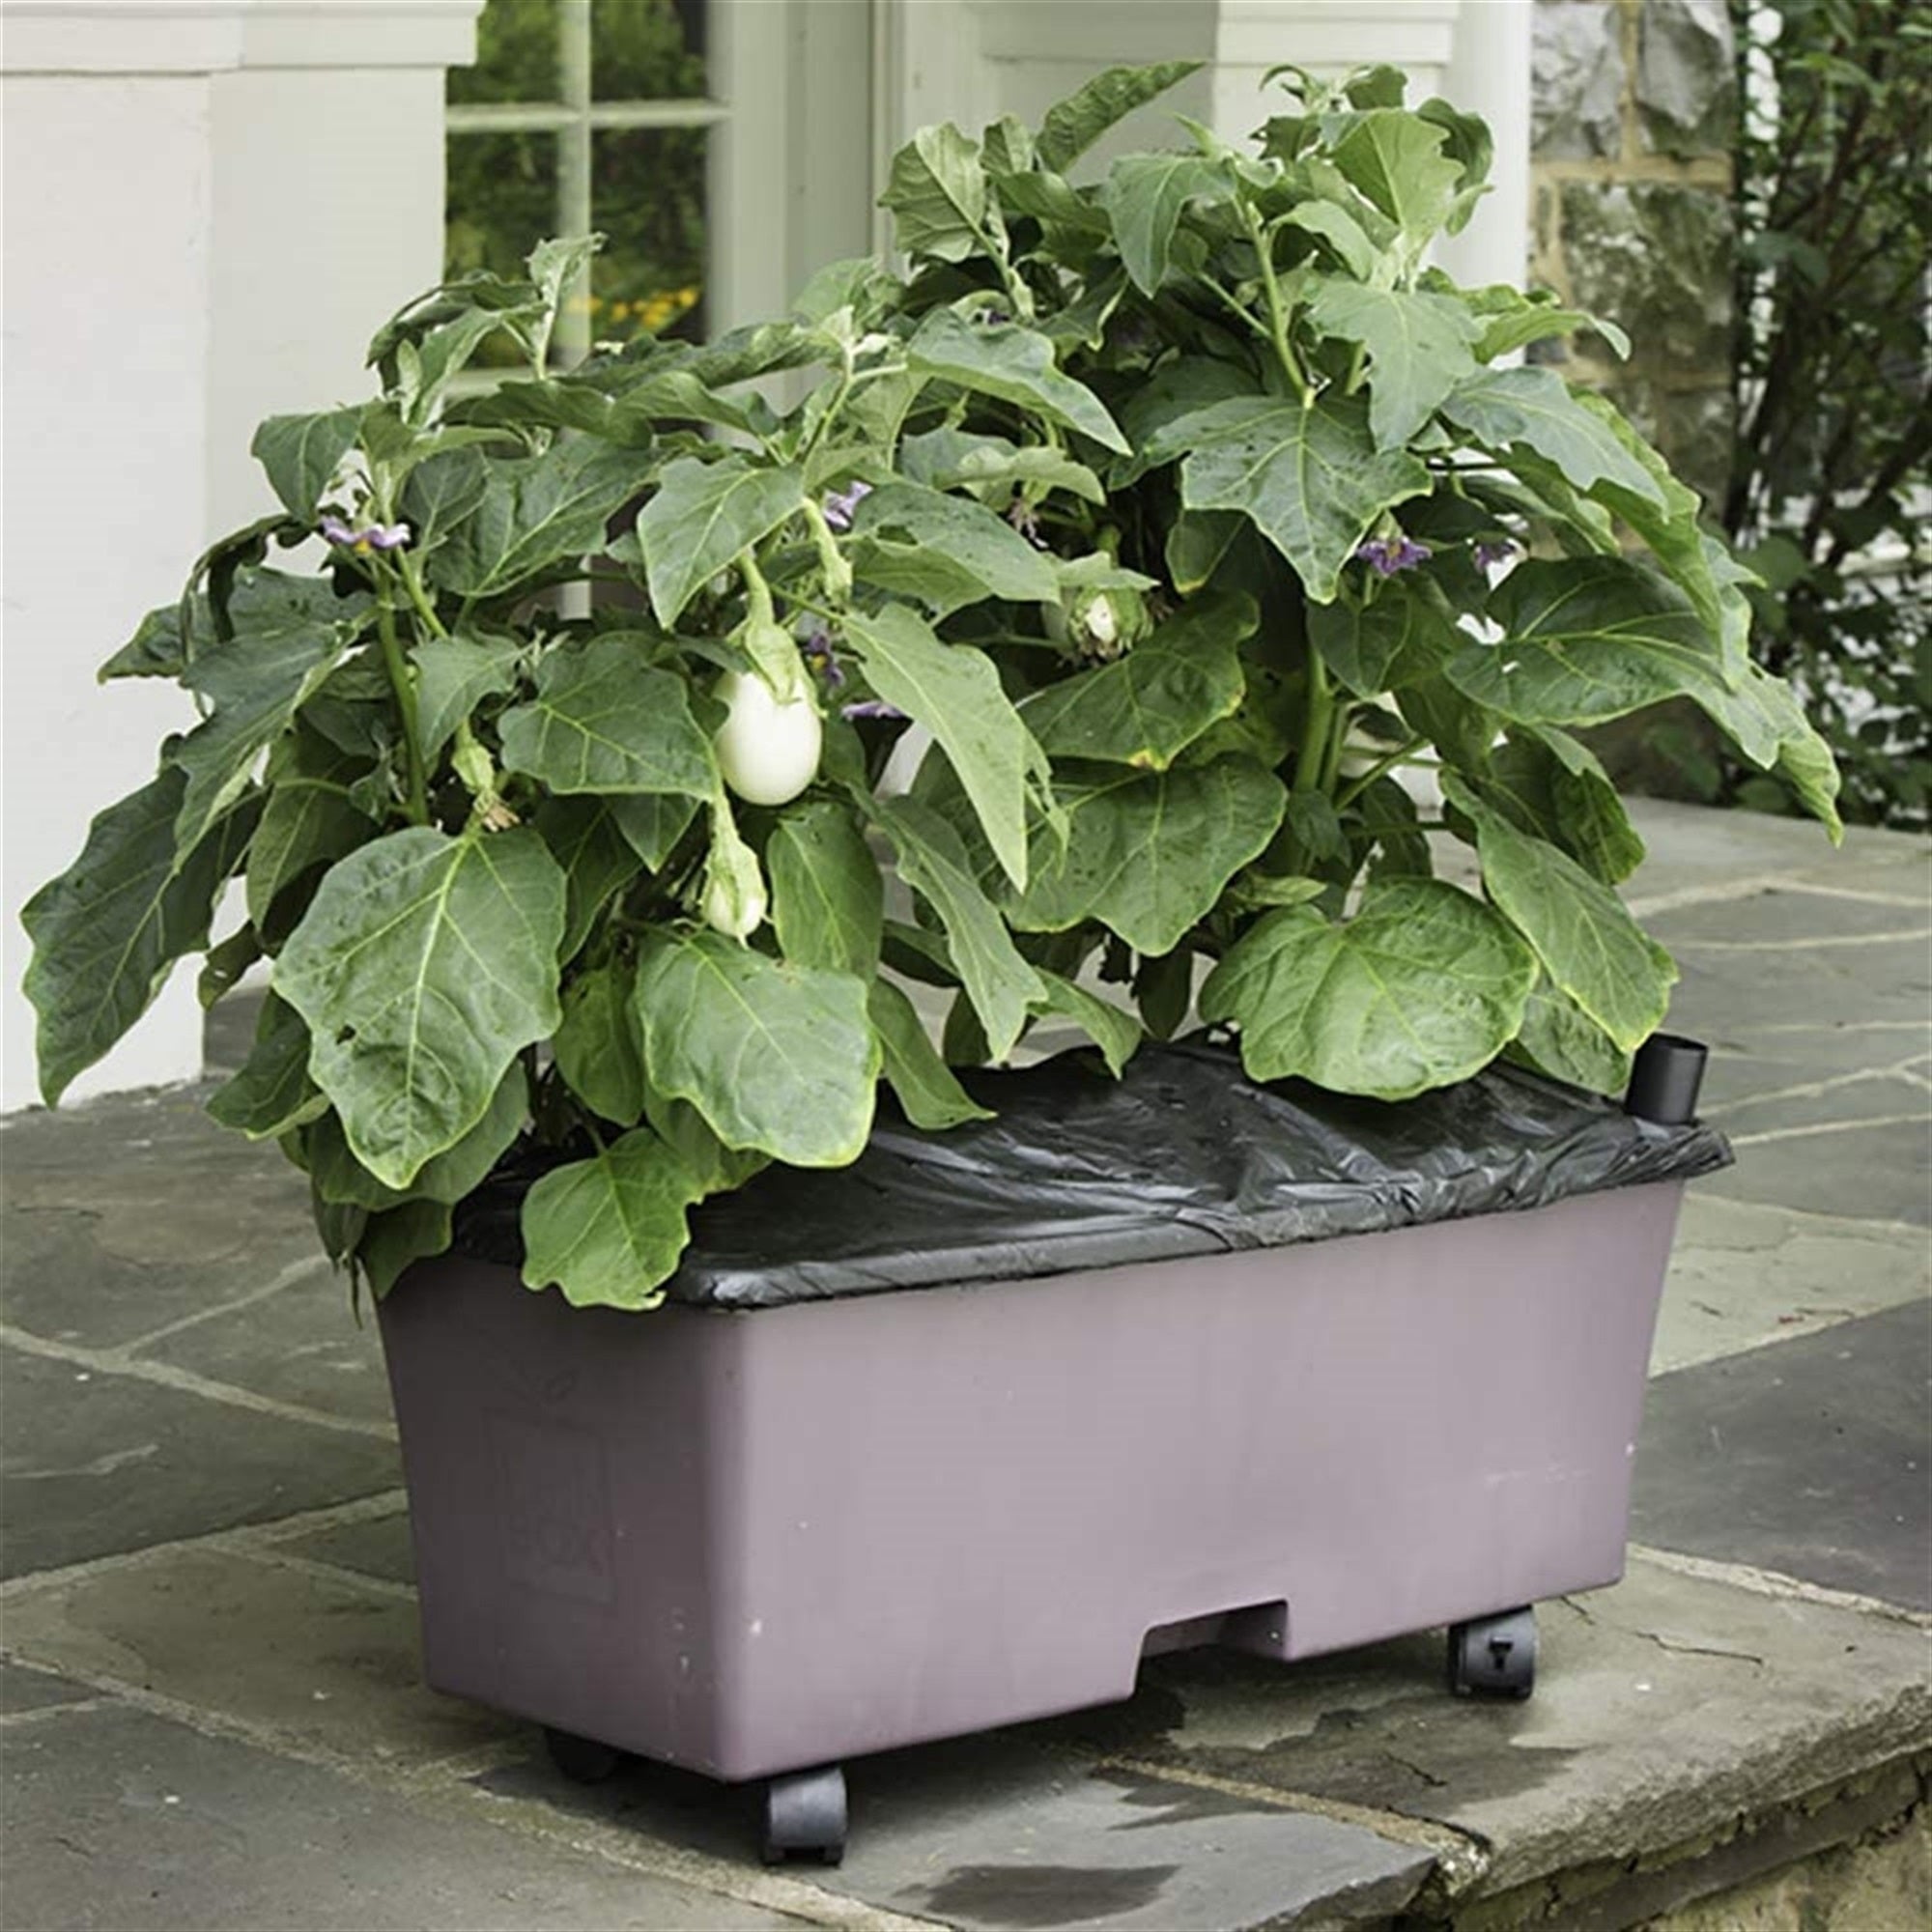 Novelty EarthBox Self-Watering Growing System Garden Kit